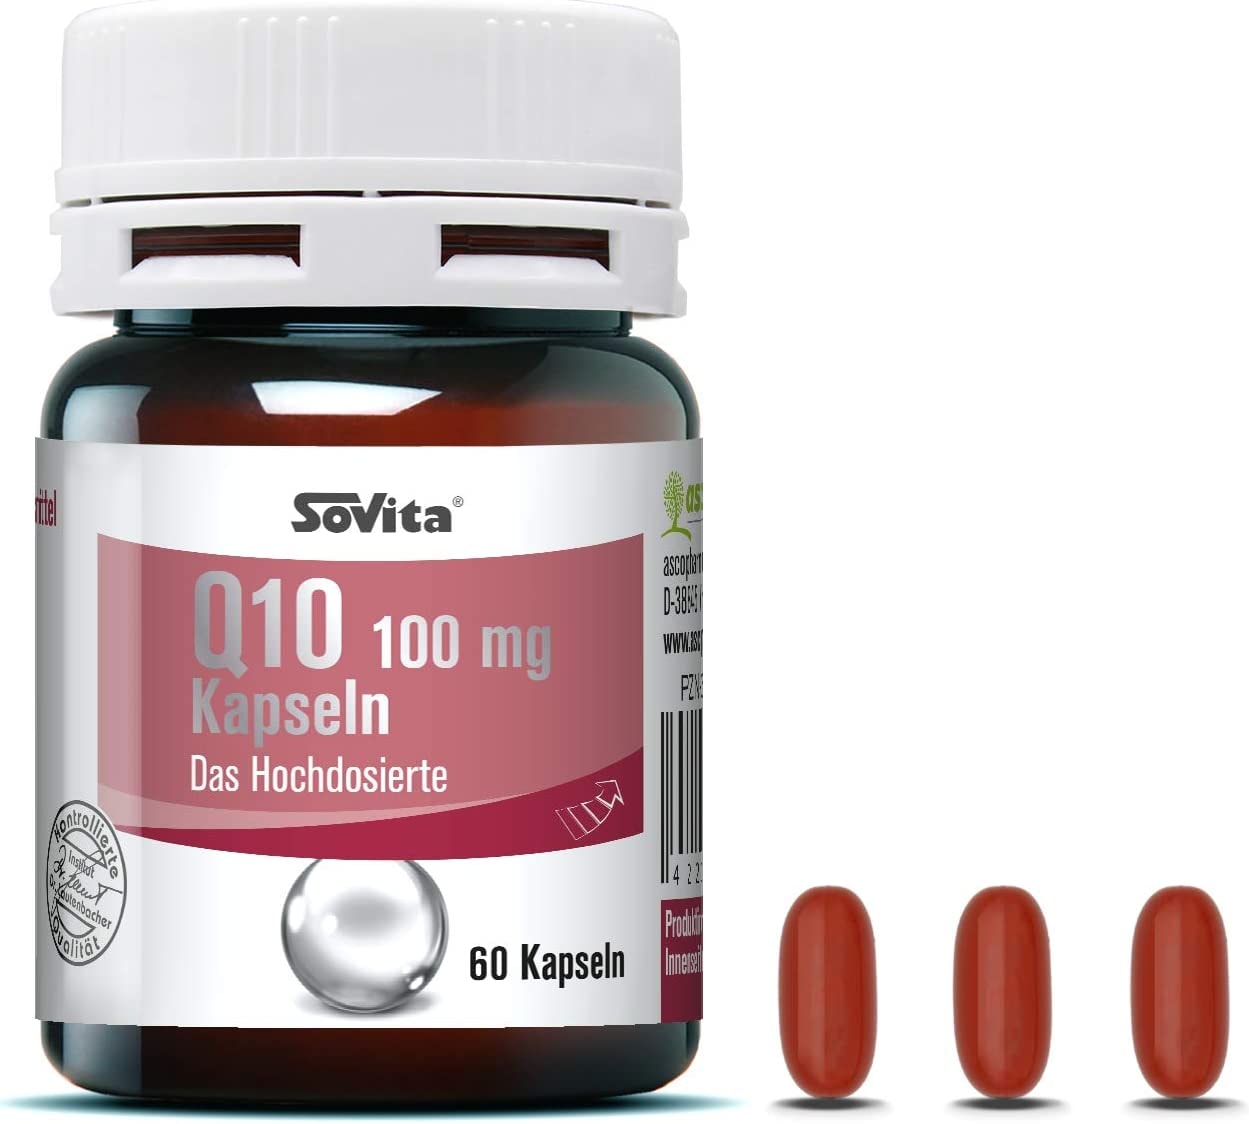 Ascopharm - Sovita Q10 100 mg Kapseln, Coenzym Q10, Q10 Kapseln hochdosiert, 60 Kapseln